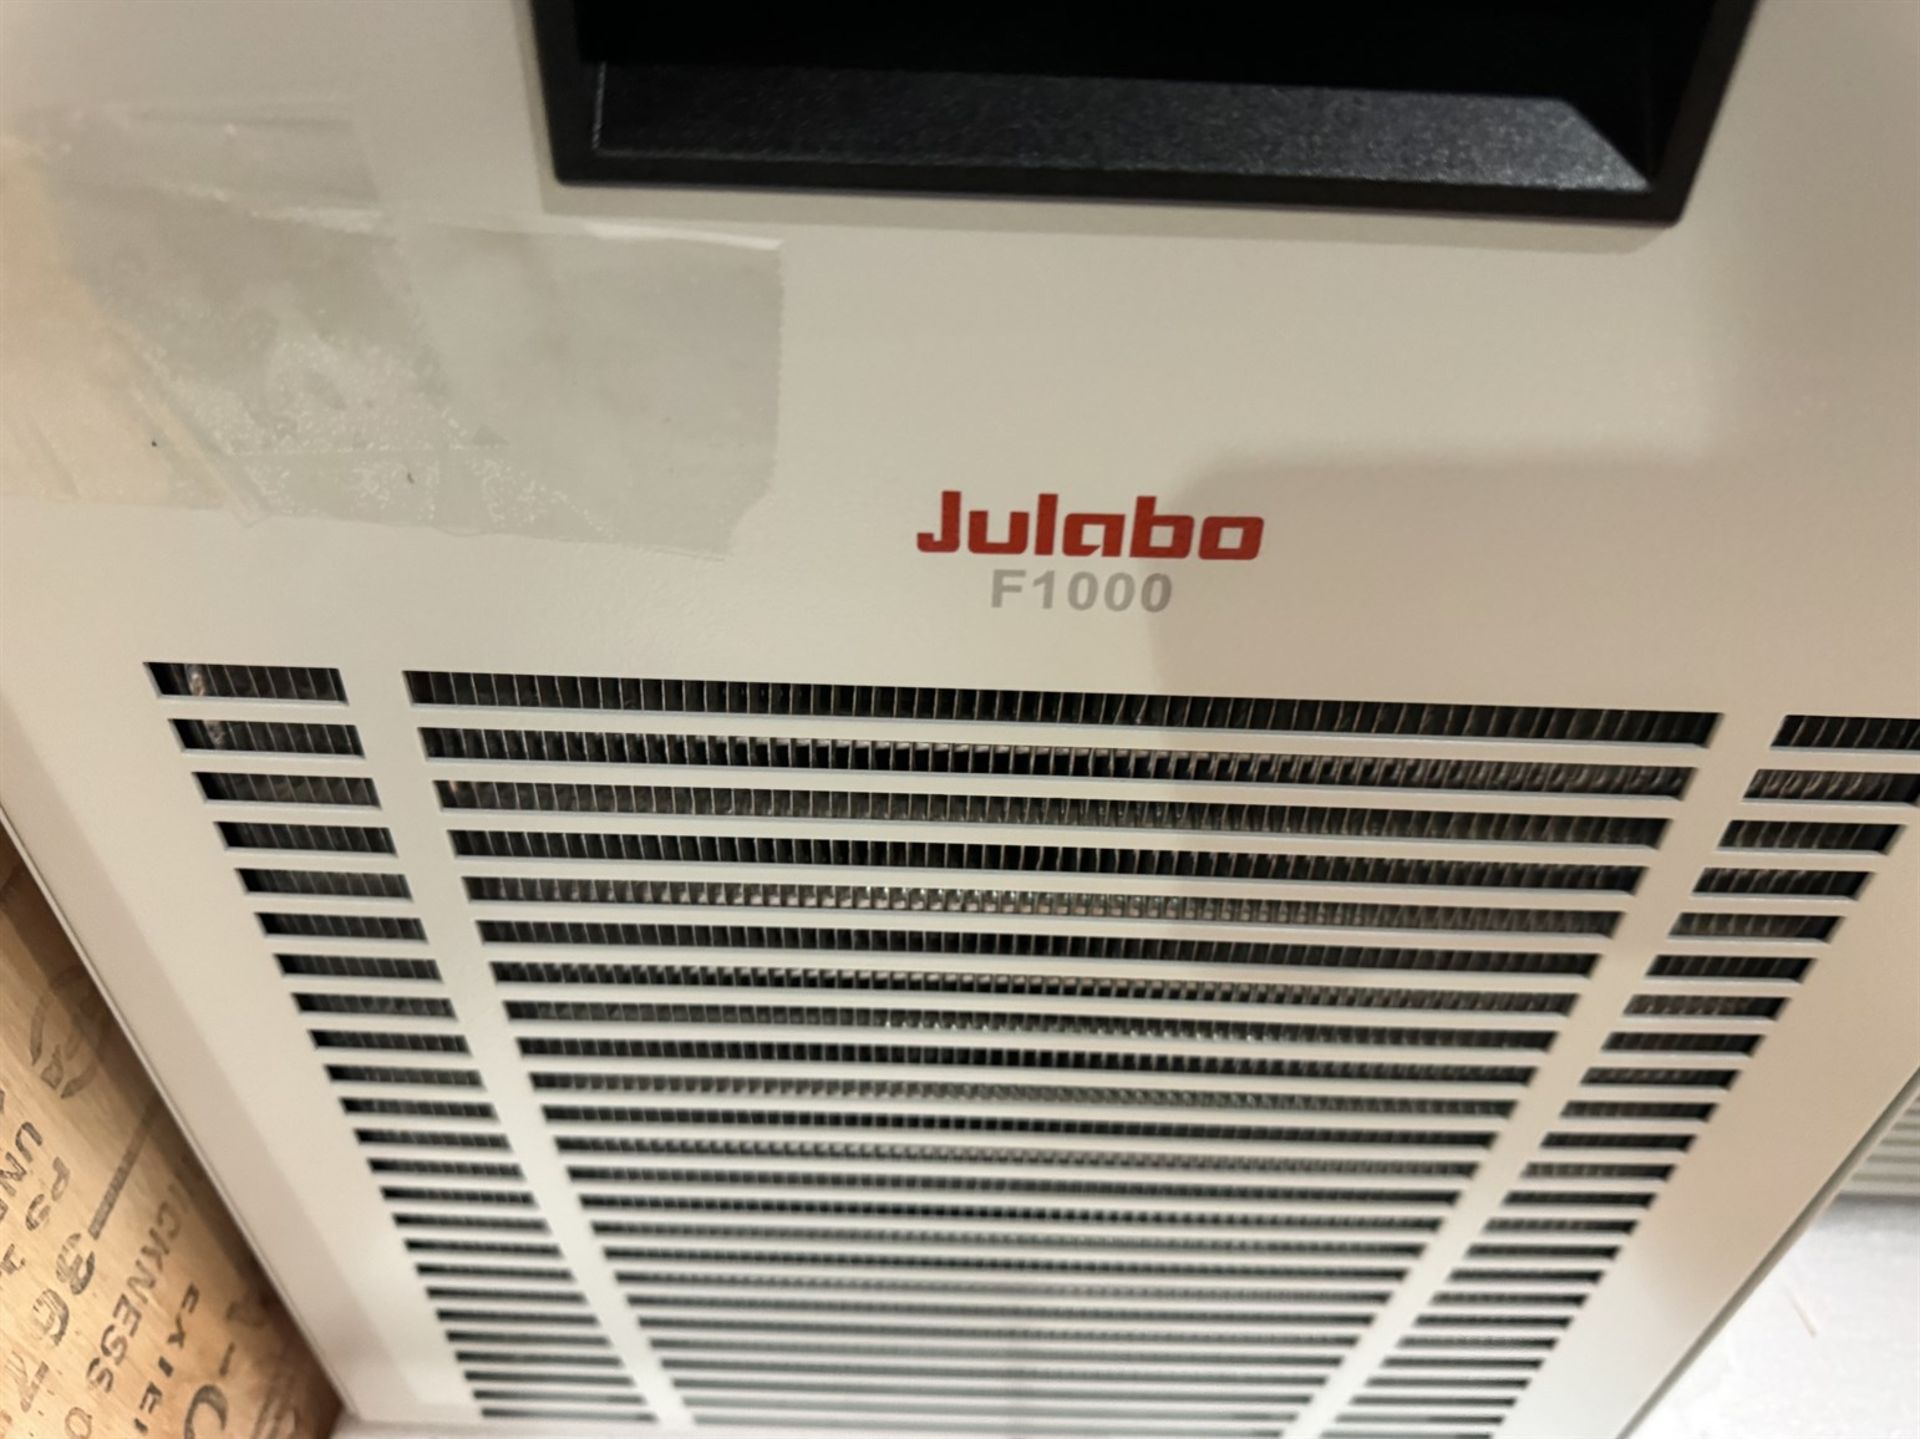 JULABO F1000 Compact Recirculating Cooler, s/n 10373763 - Image 4 of 5